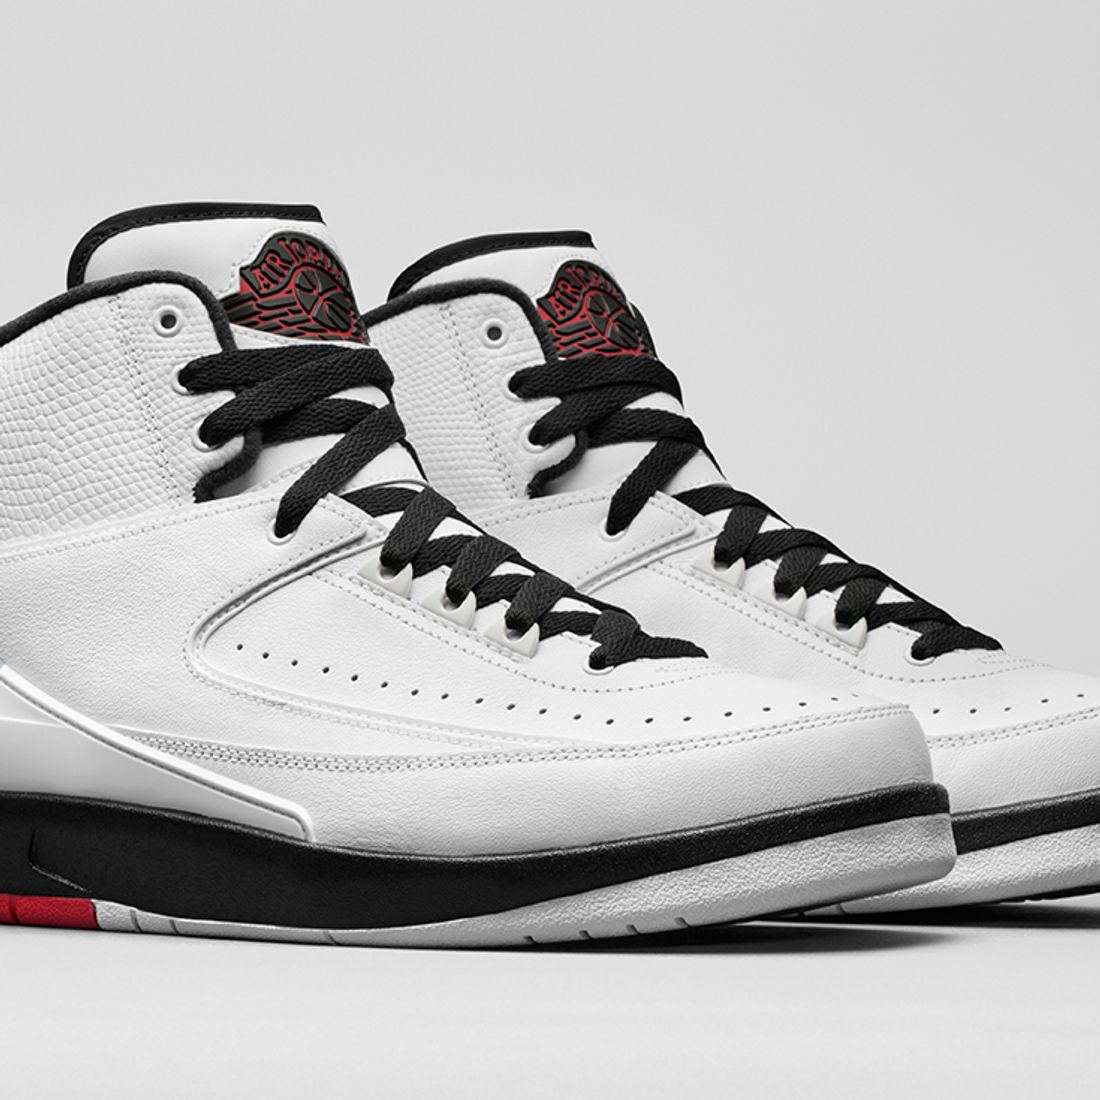 Air Jordan X Converse The 2 That Started It All Pack - Sneaker Freaker